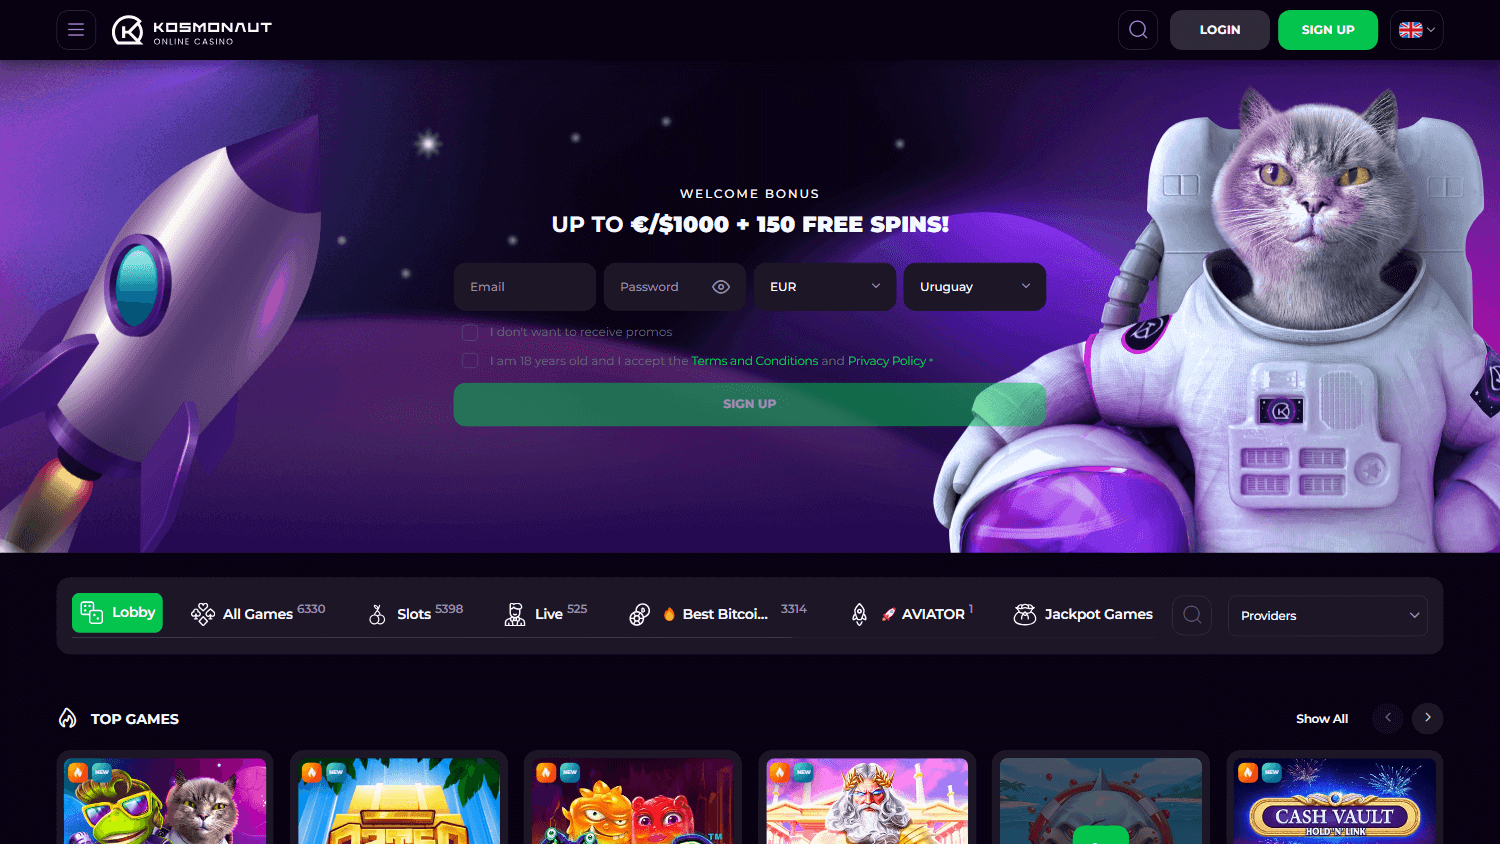 kosmonaut_casino_homepage_desktop